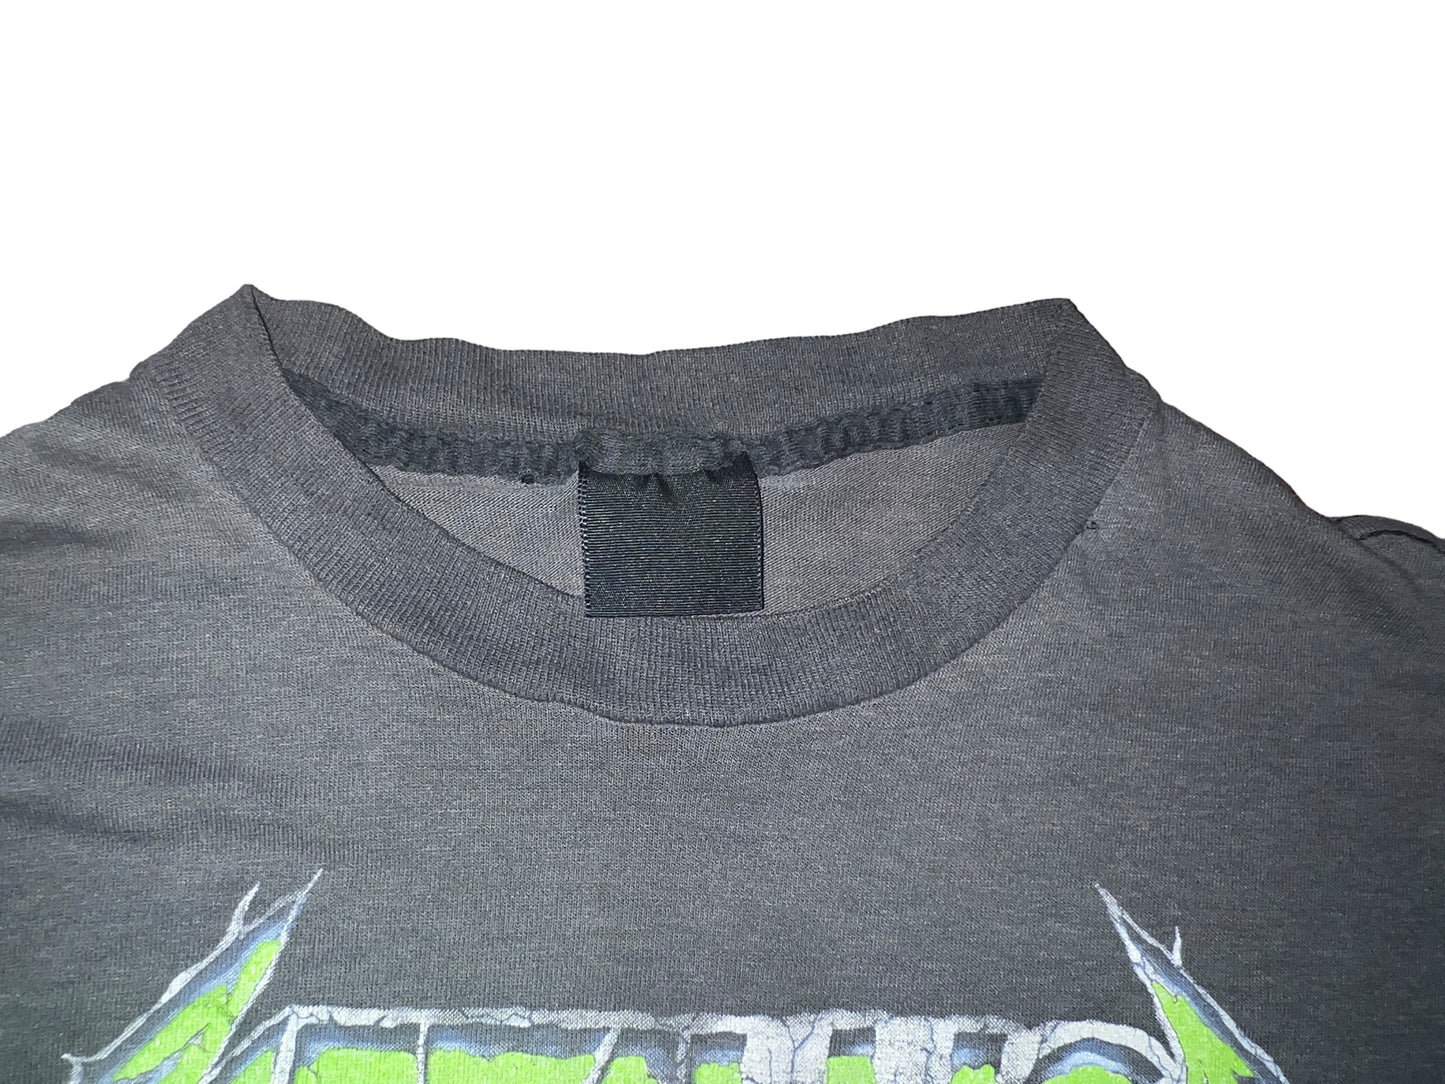 Vintage 80's Metallica T-Shirt